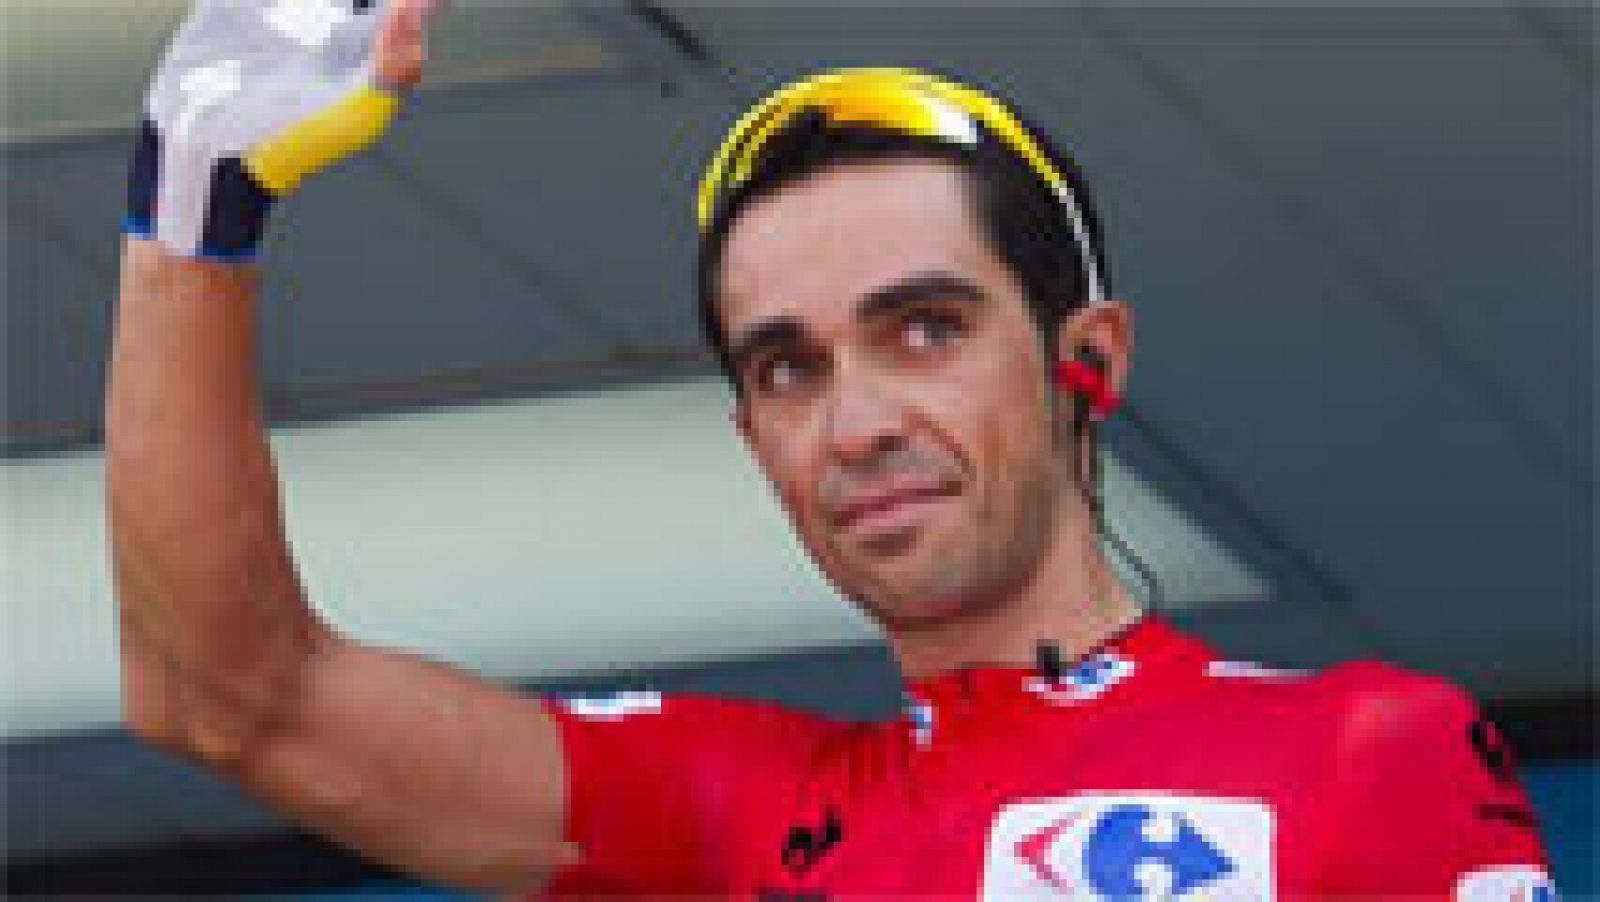 Telediario 1: Contador: "La última semana va a ser complicada" | RTVE Play